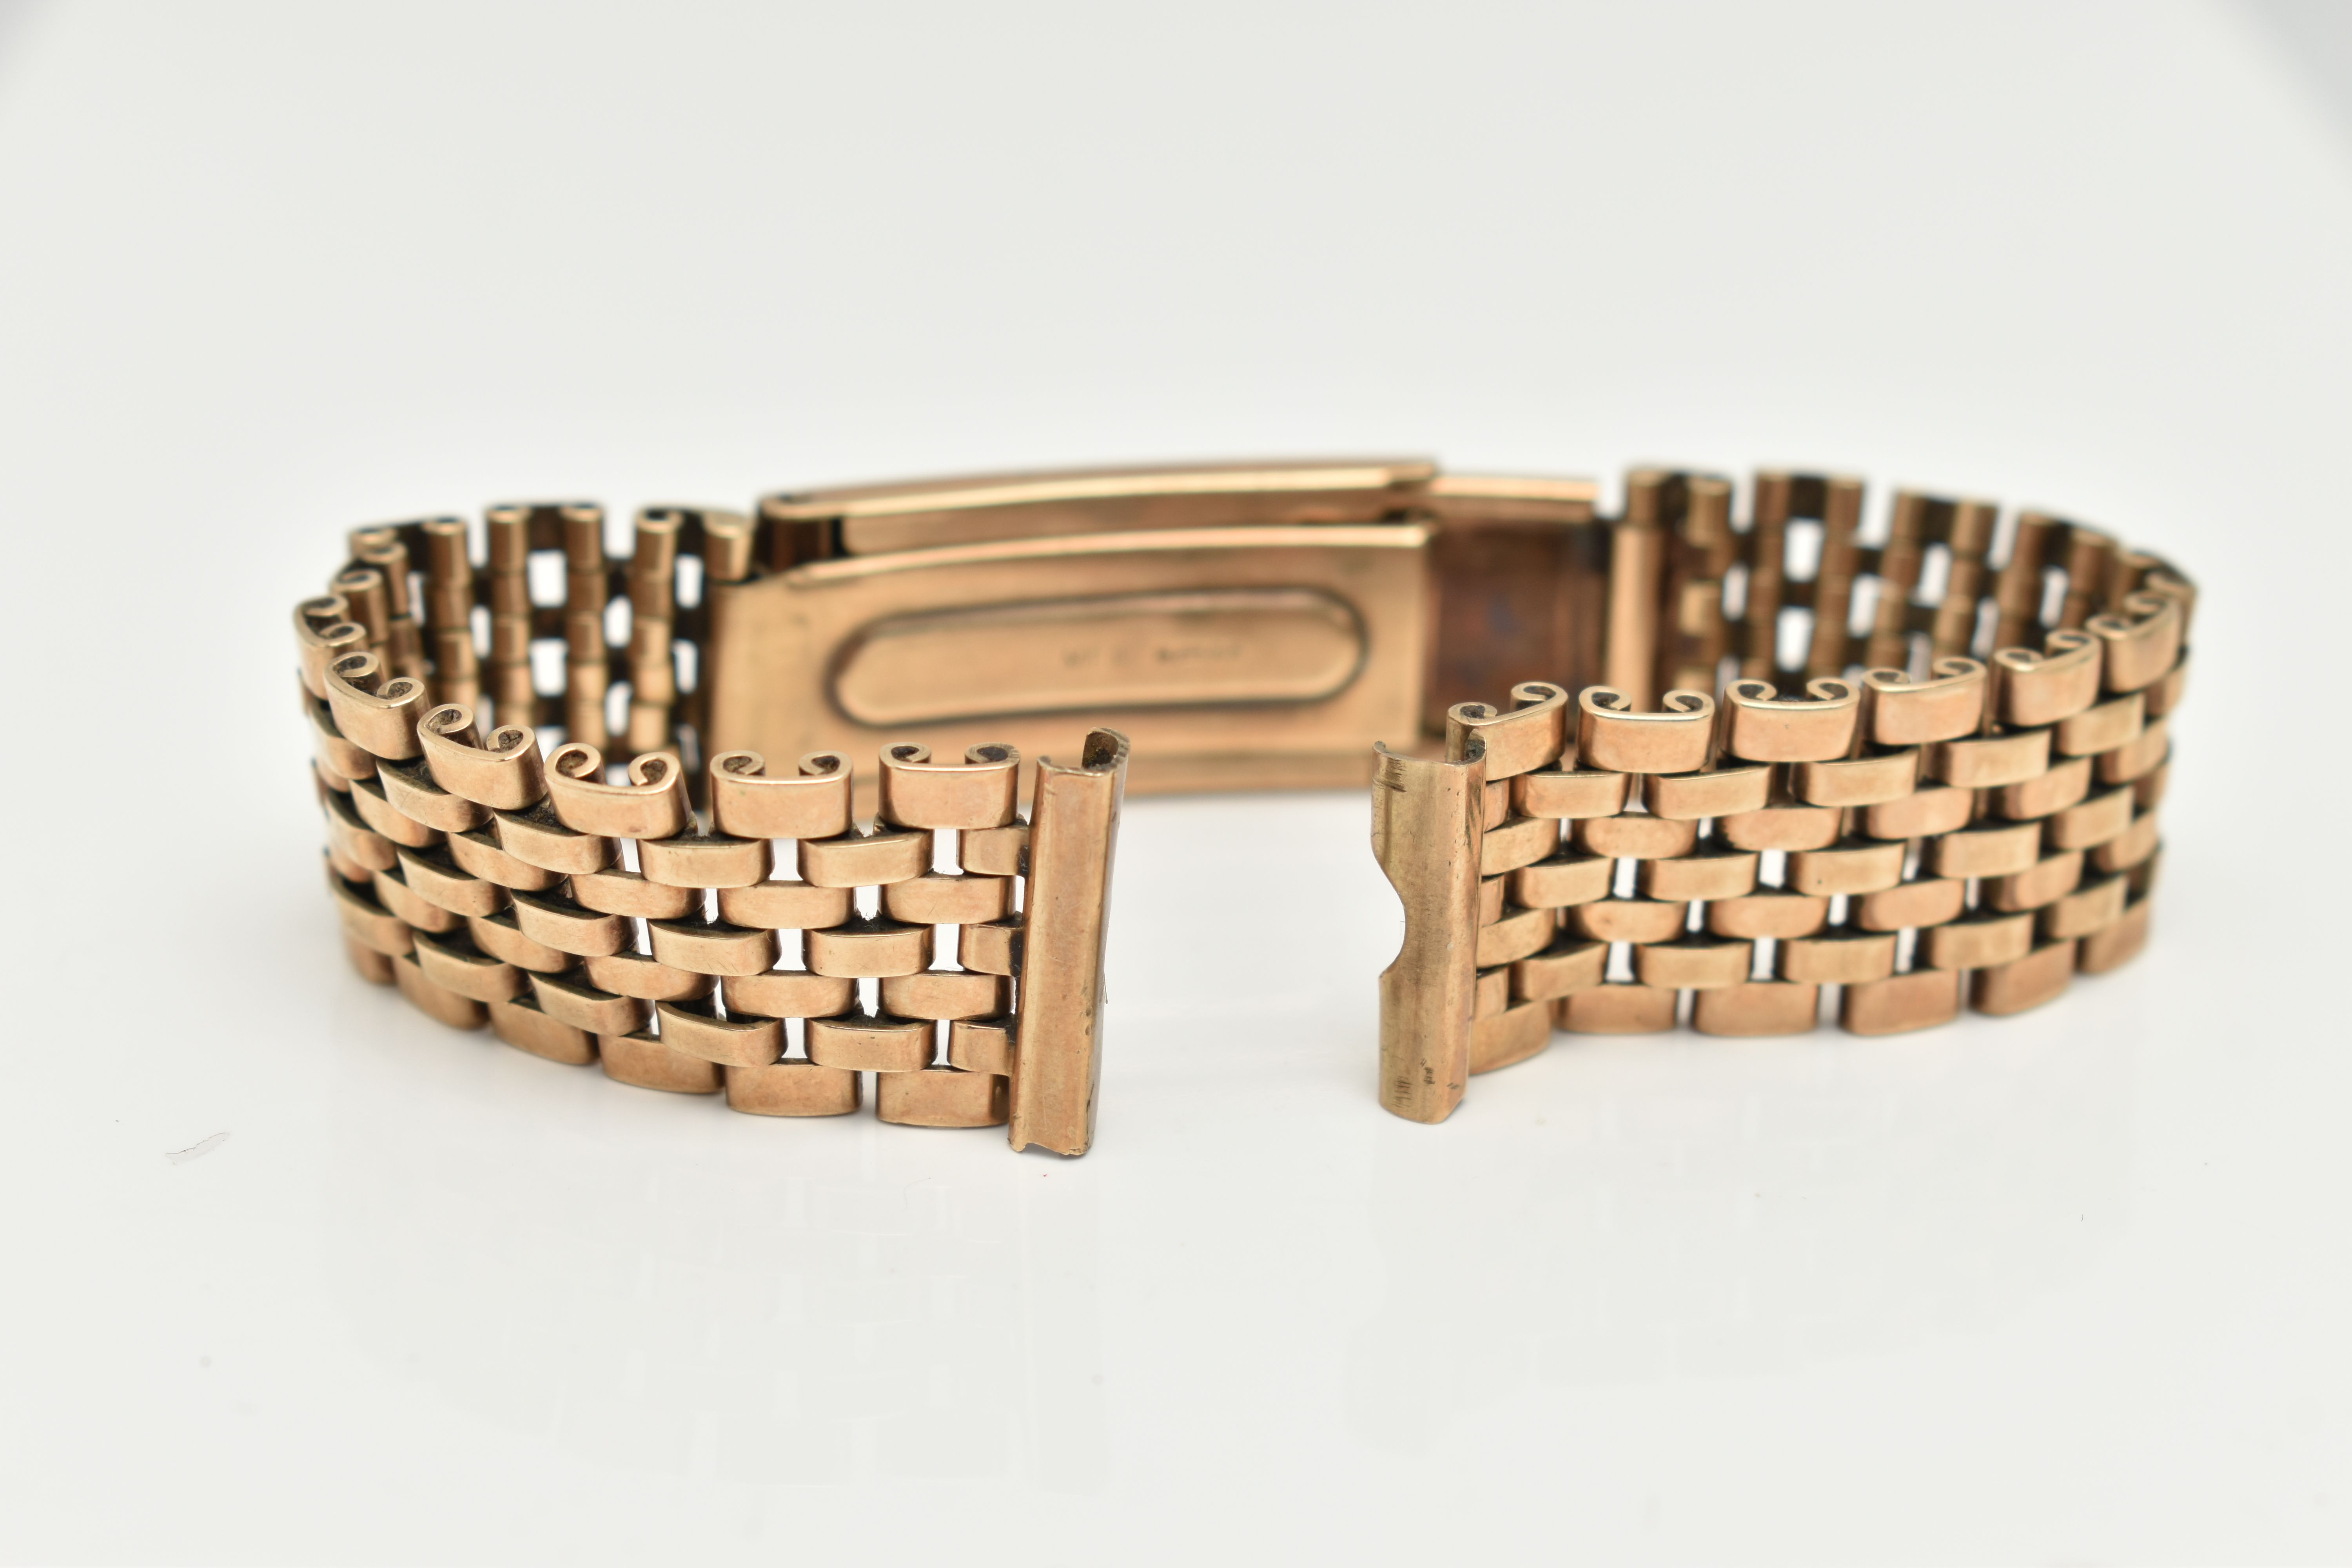 A GENTS 9CT GOLD WATCH BRACELET, brick link bracelet with folding clasp, hallmarked 9ct London 1977,